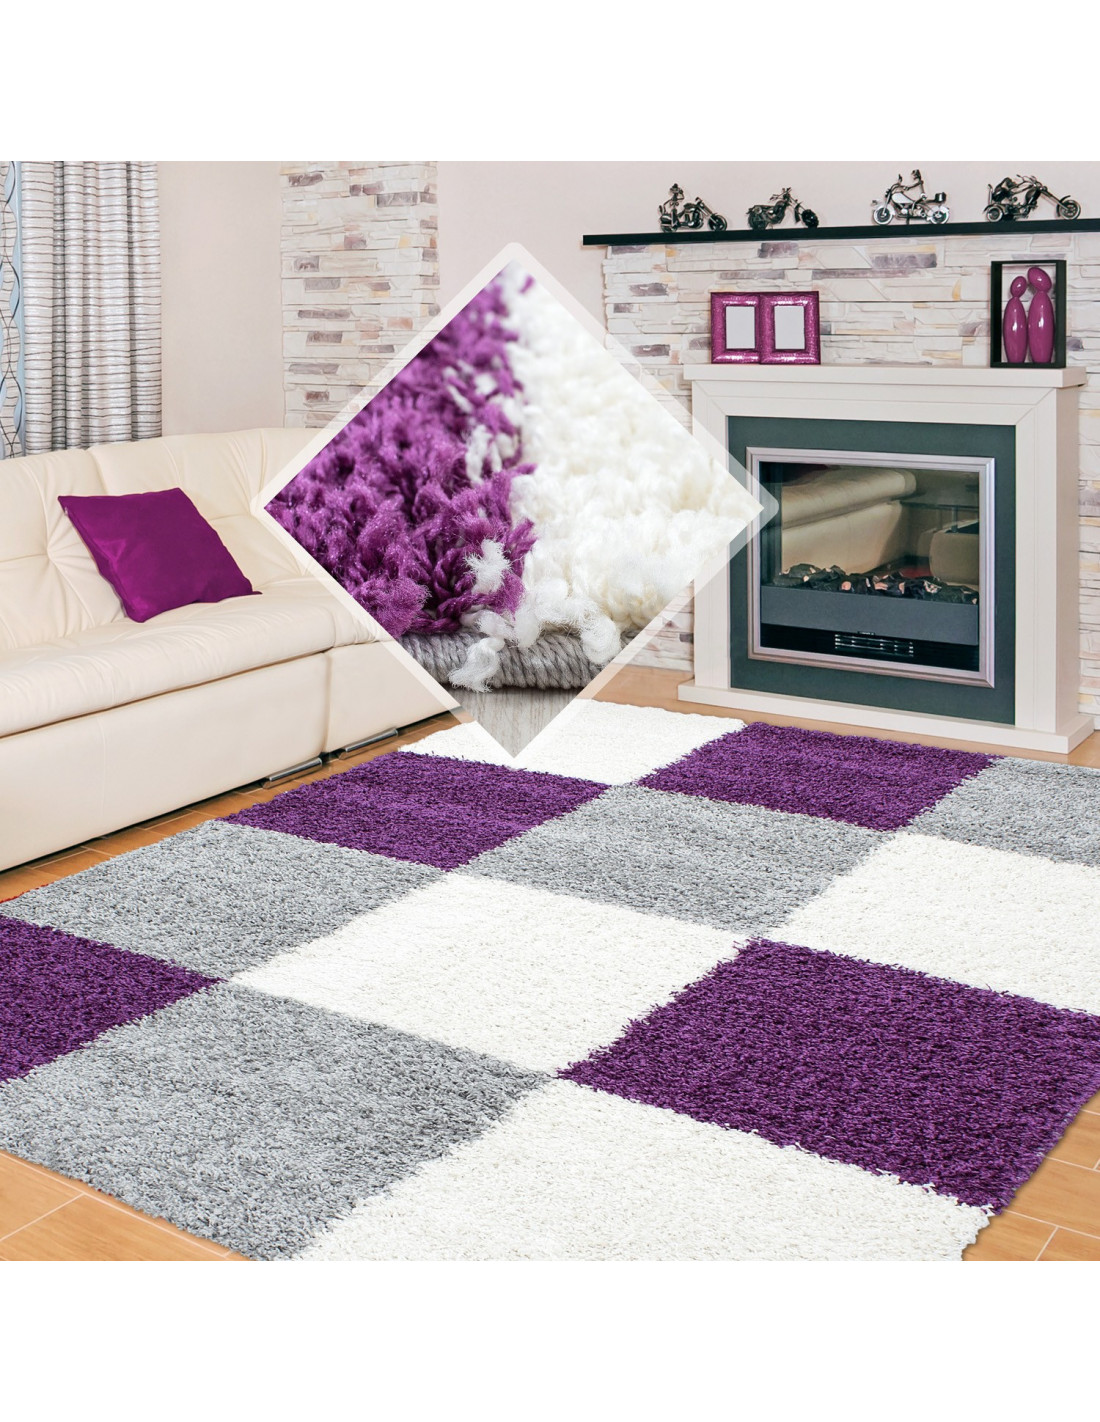 Hoogpolig tapijt poolhoogte 3cm geruit paars wit grijs